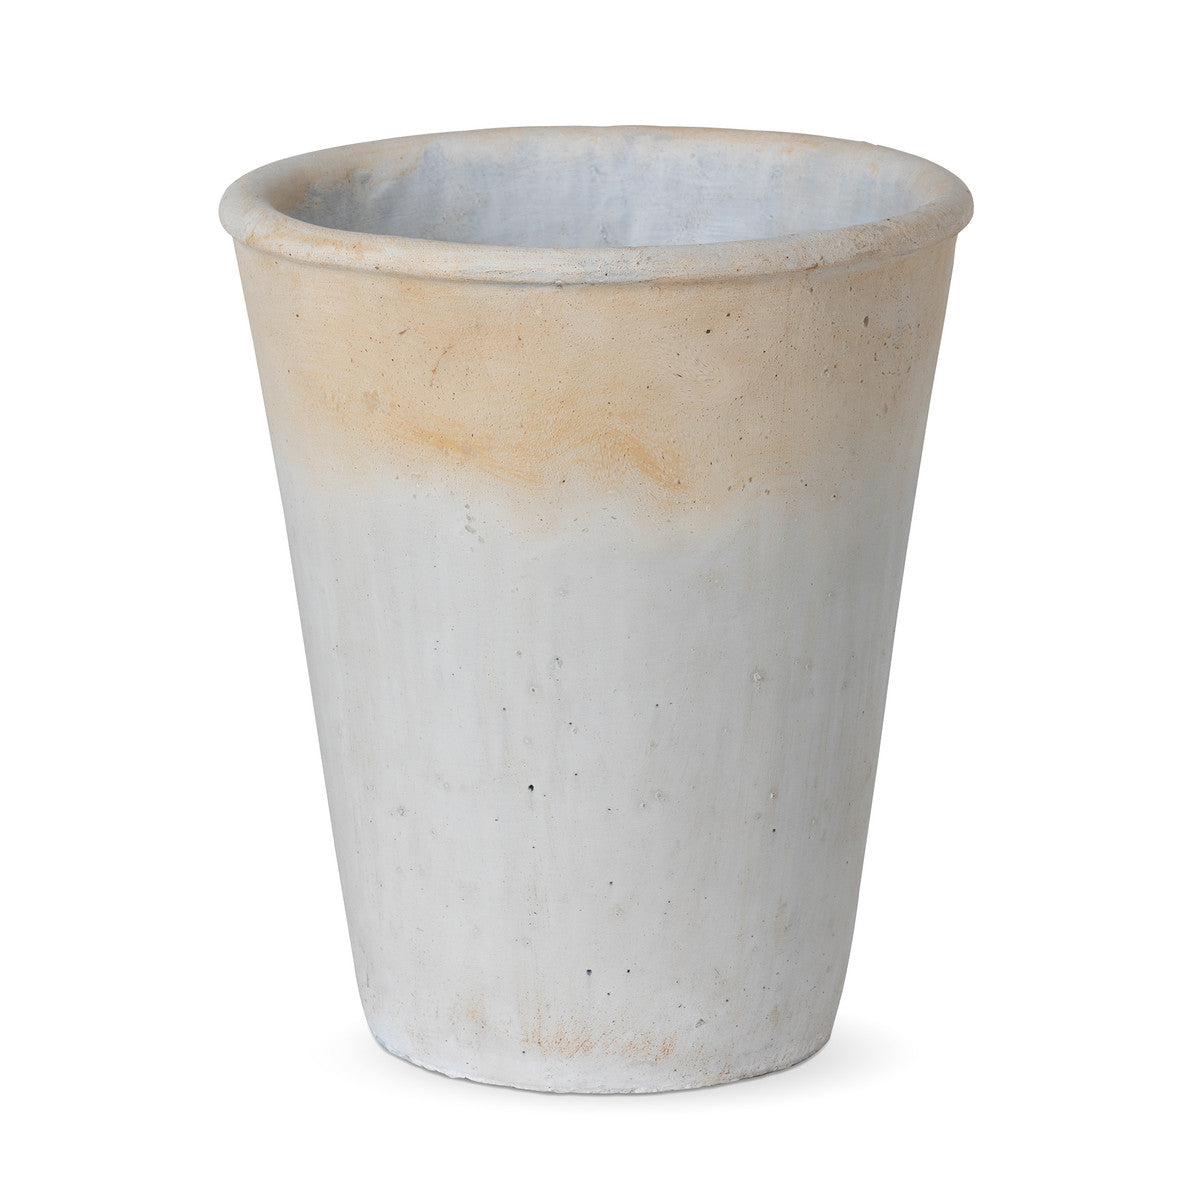 Distressed Concrete Pot